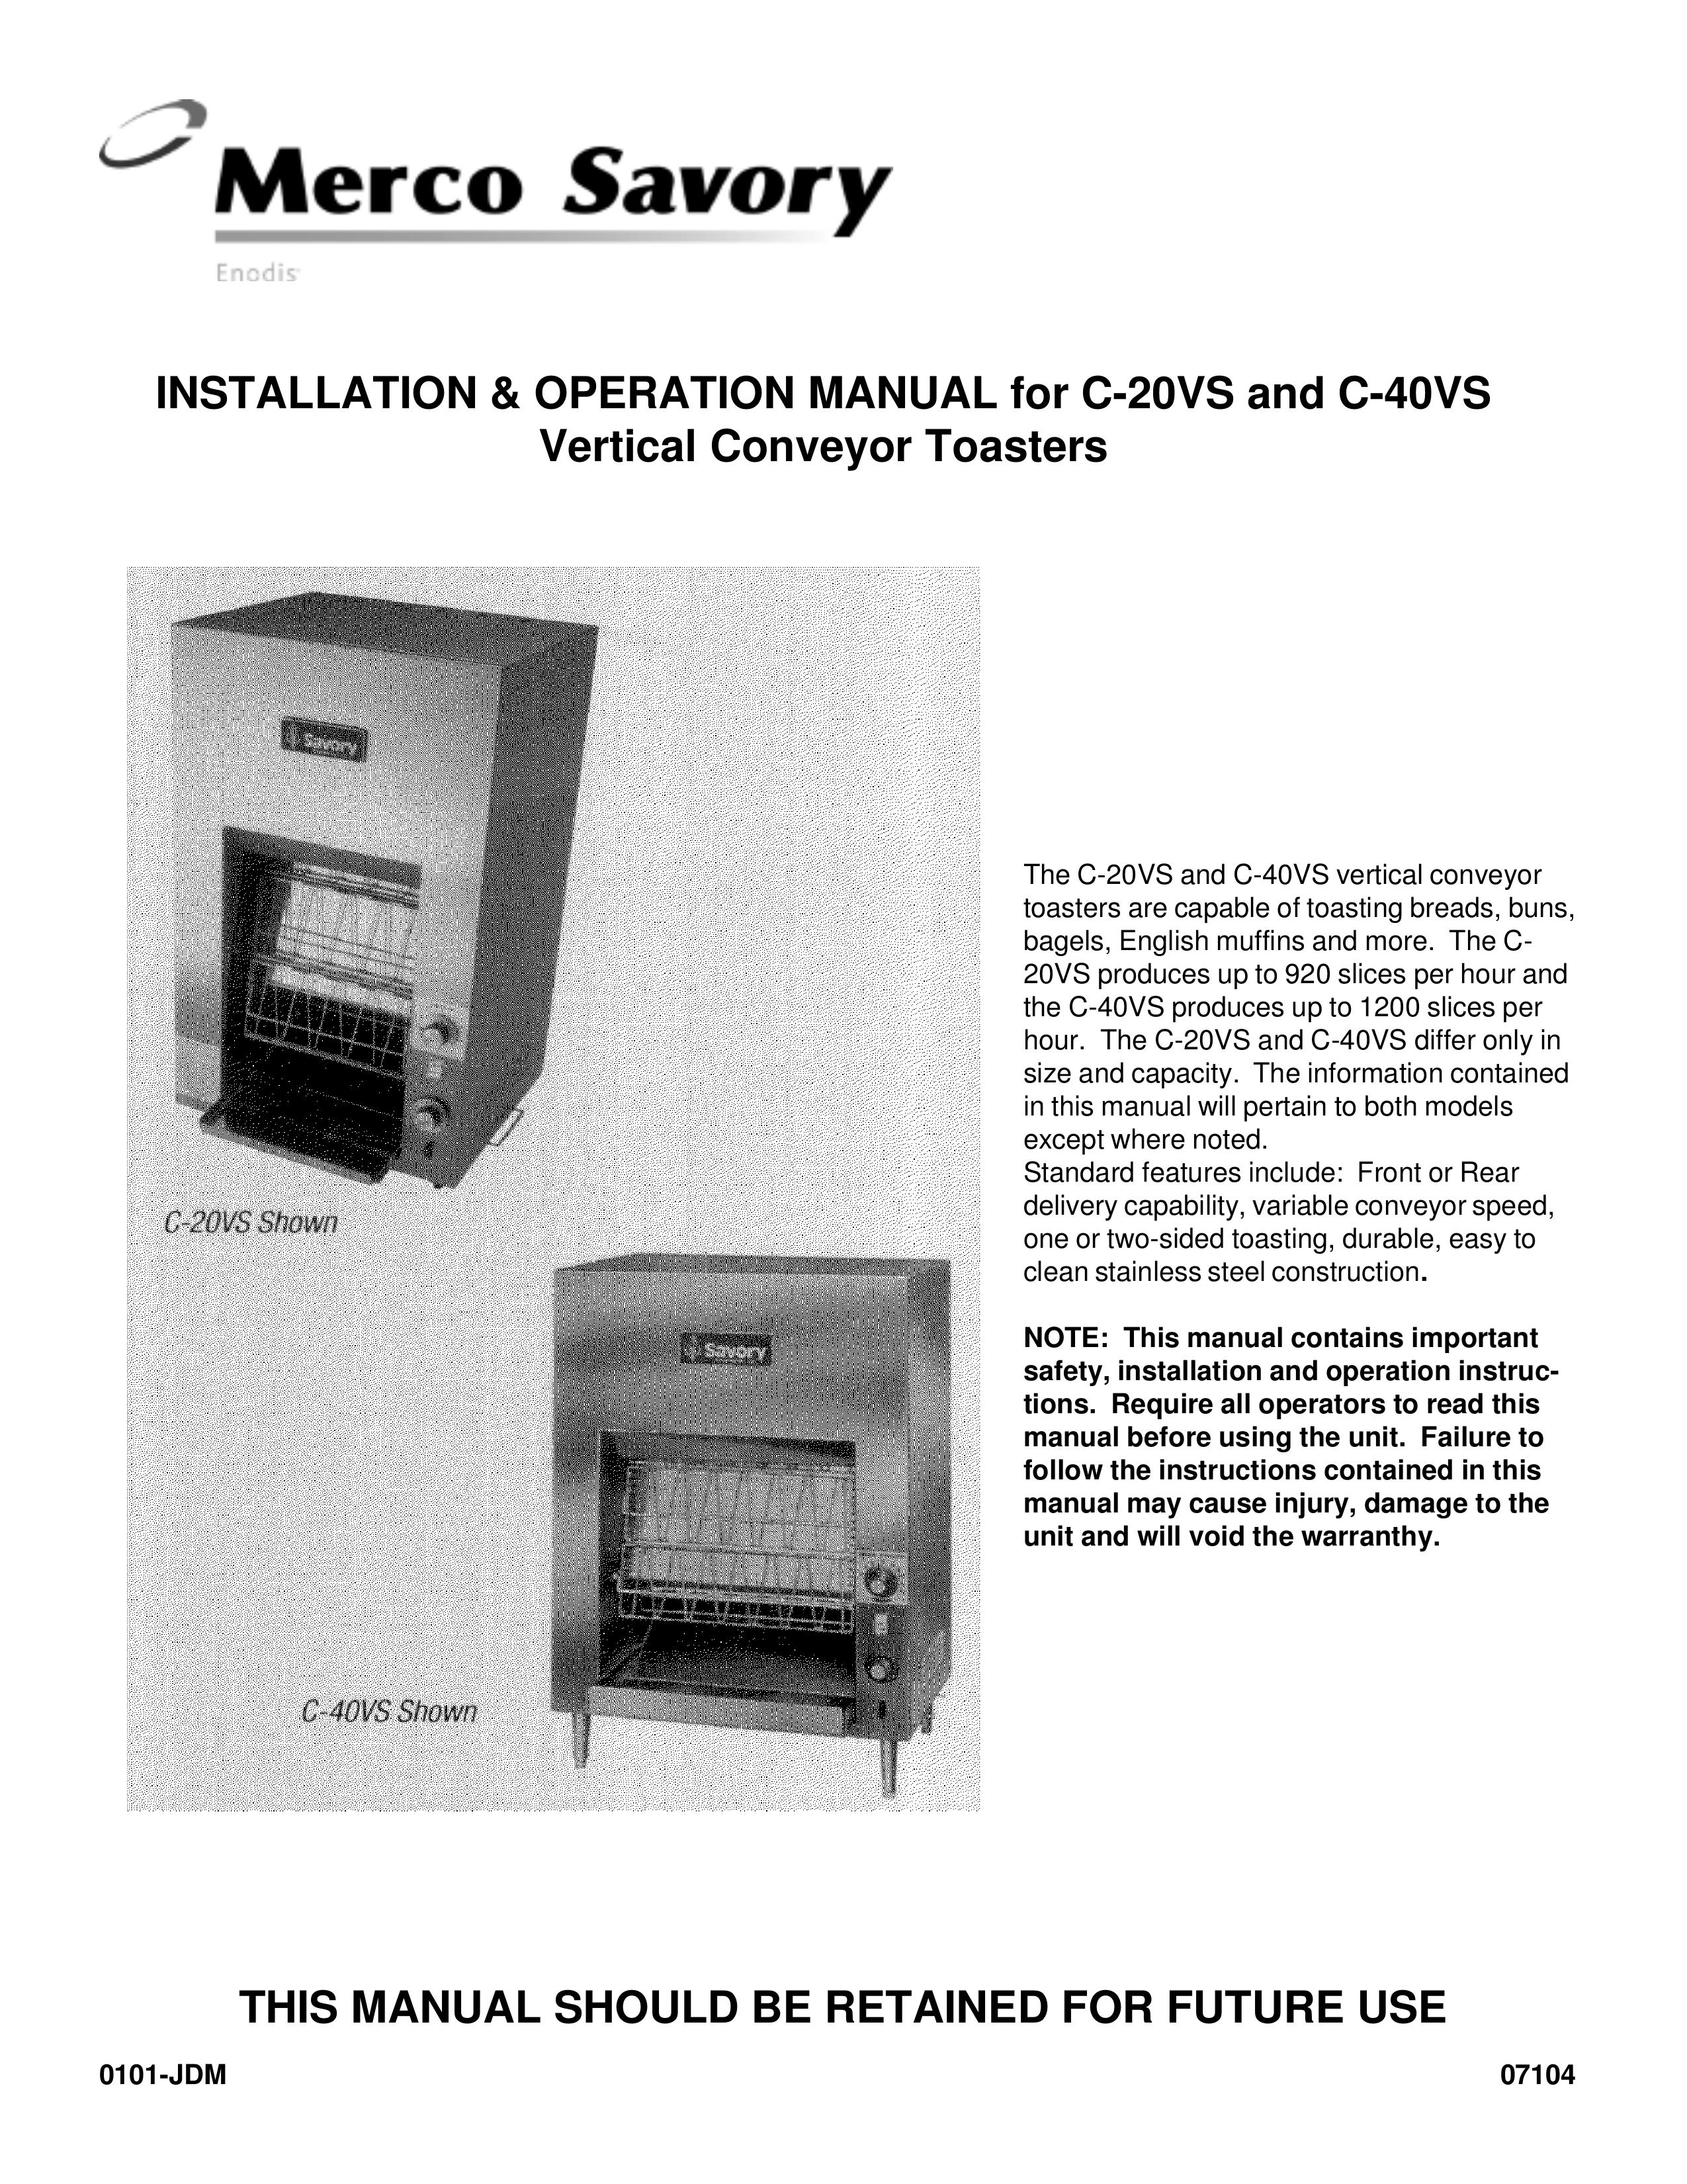 Merco Savory C-40VS Toaster User Manual